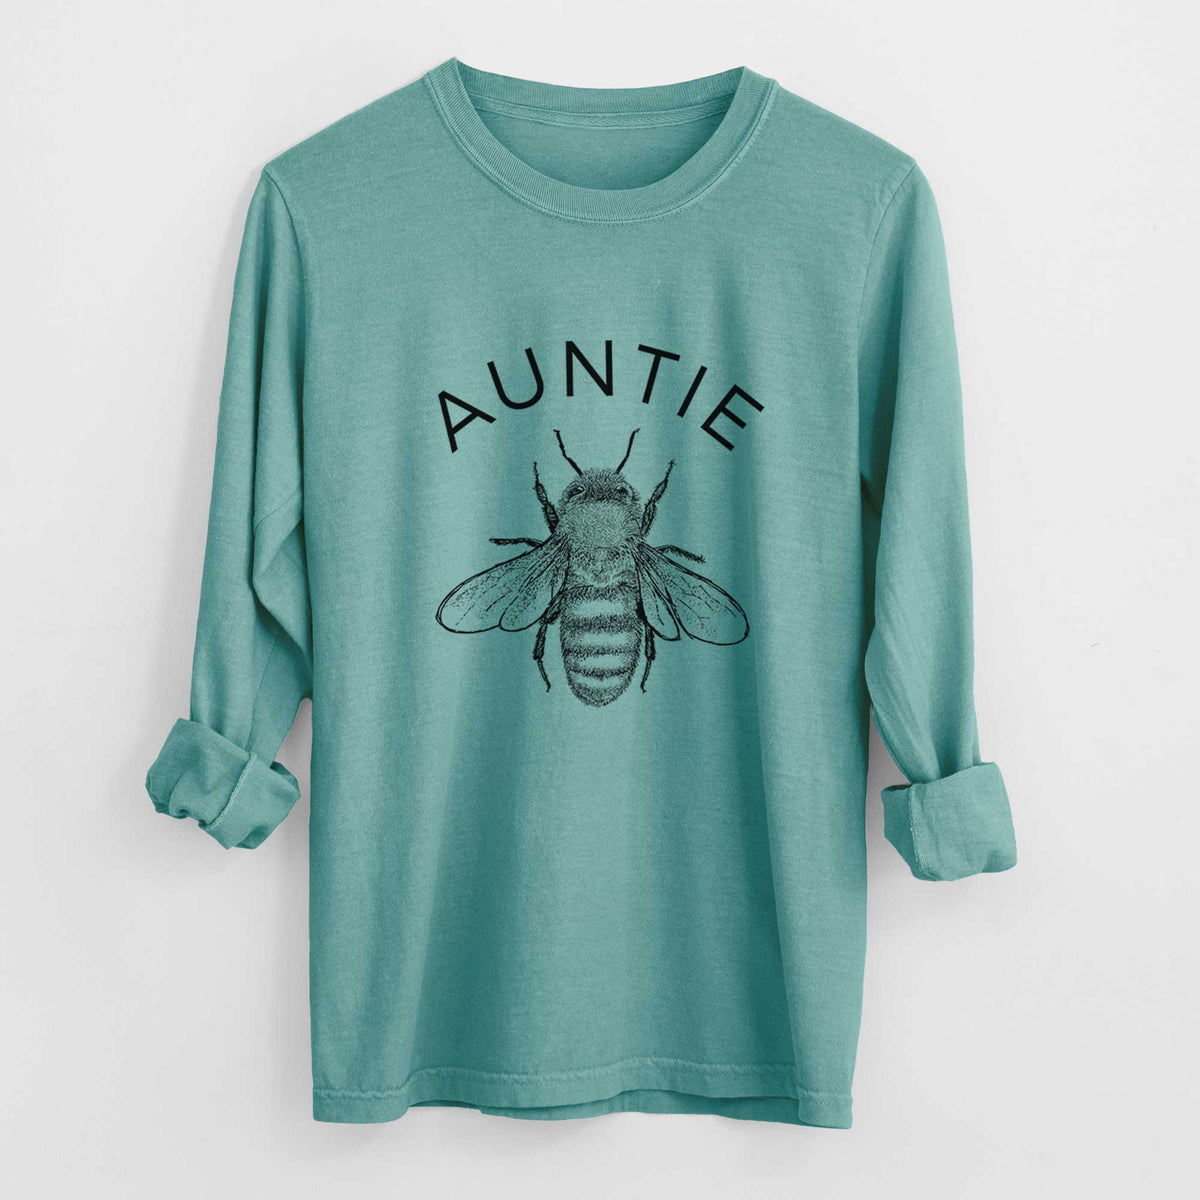 Auntie Bee - Heavyweight 100% Cotton Long Sleeve